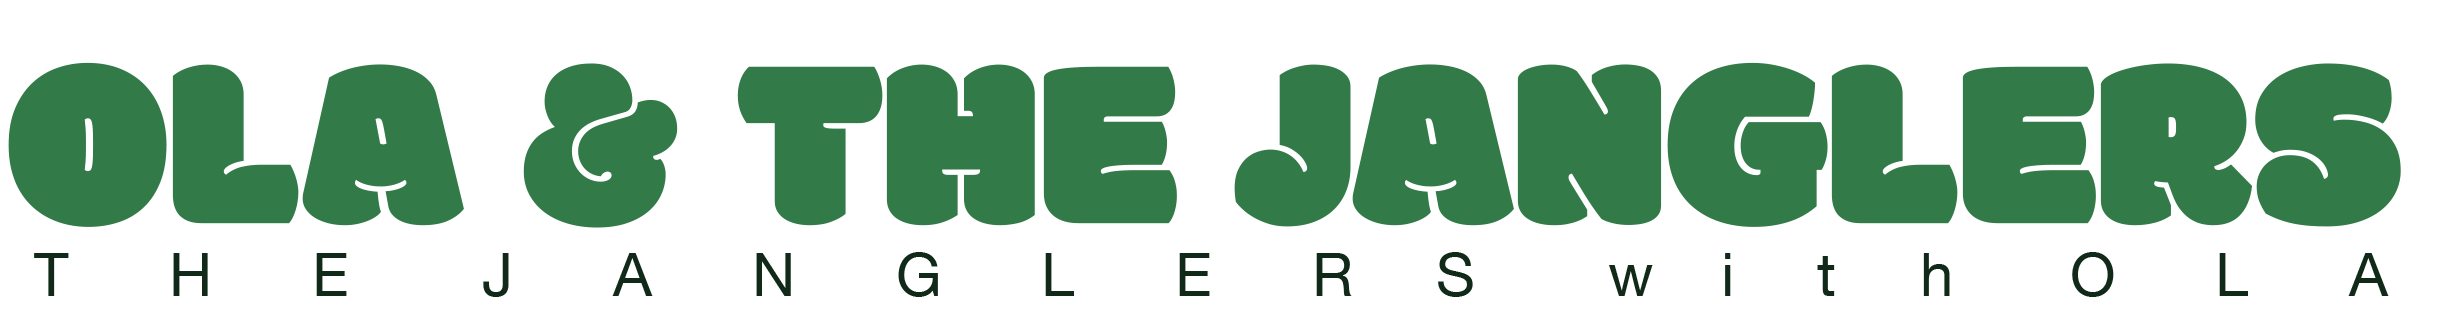 Janglers logo